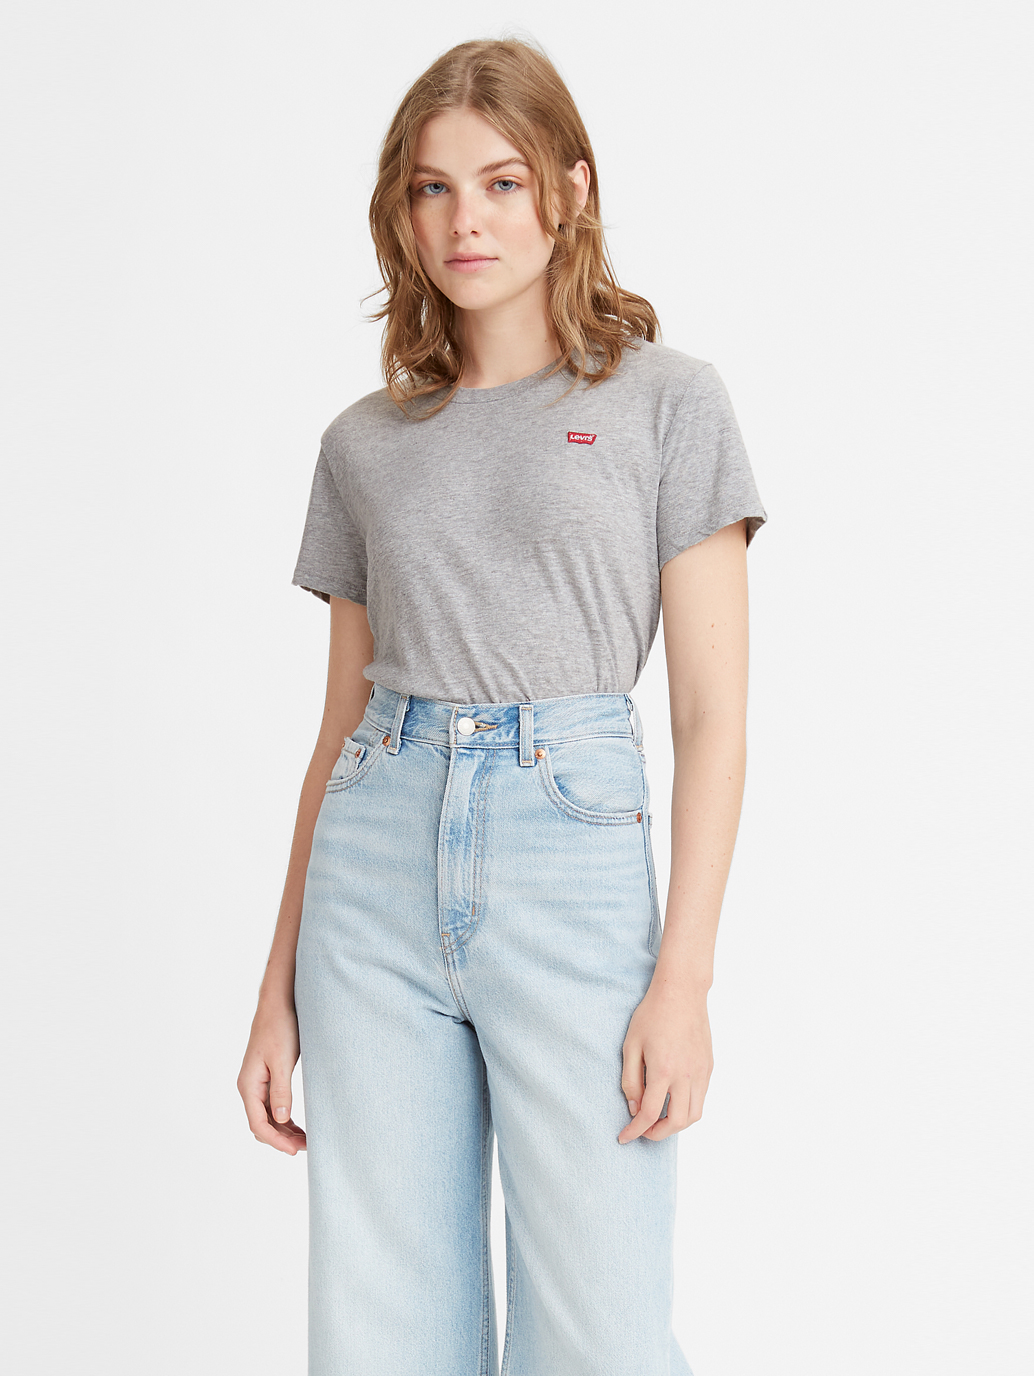 Grey Women's Perfect T-Shirt - Soft; Comfortable & Versatile